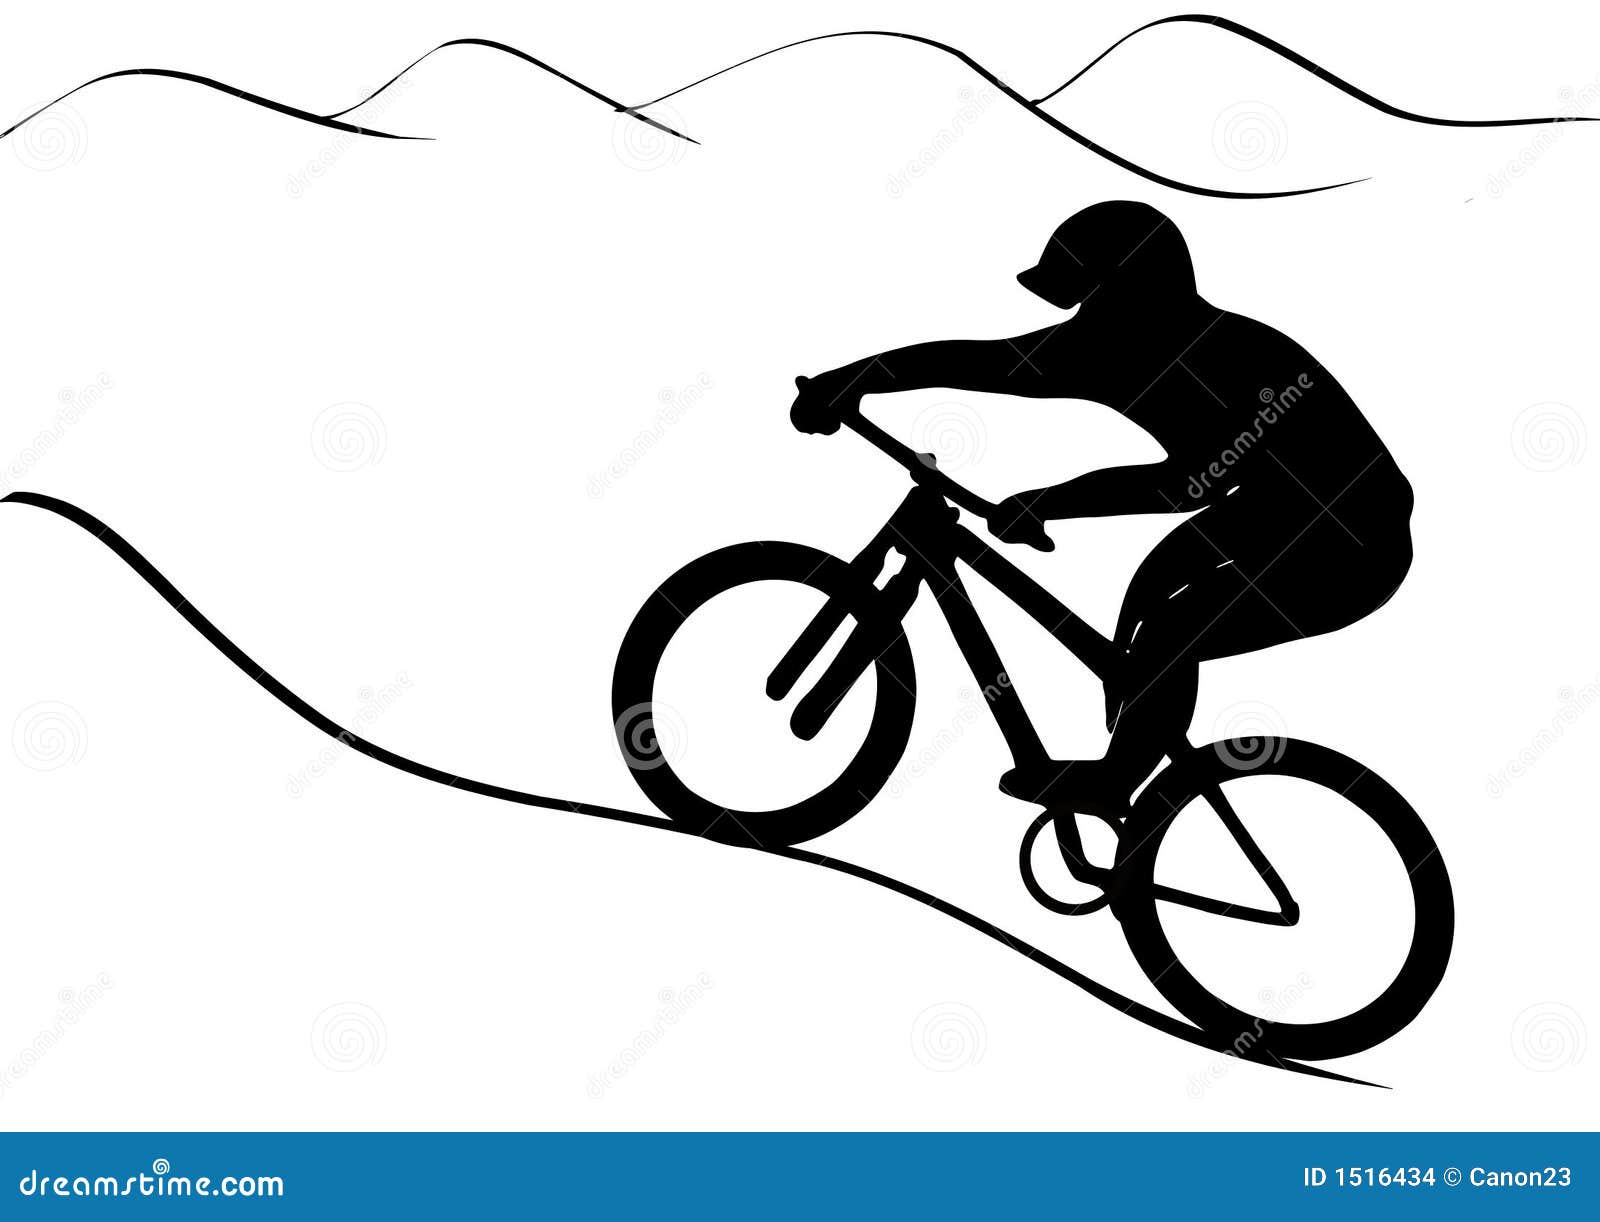 bike logo clip art - photo #40